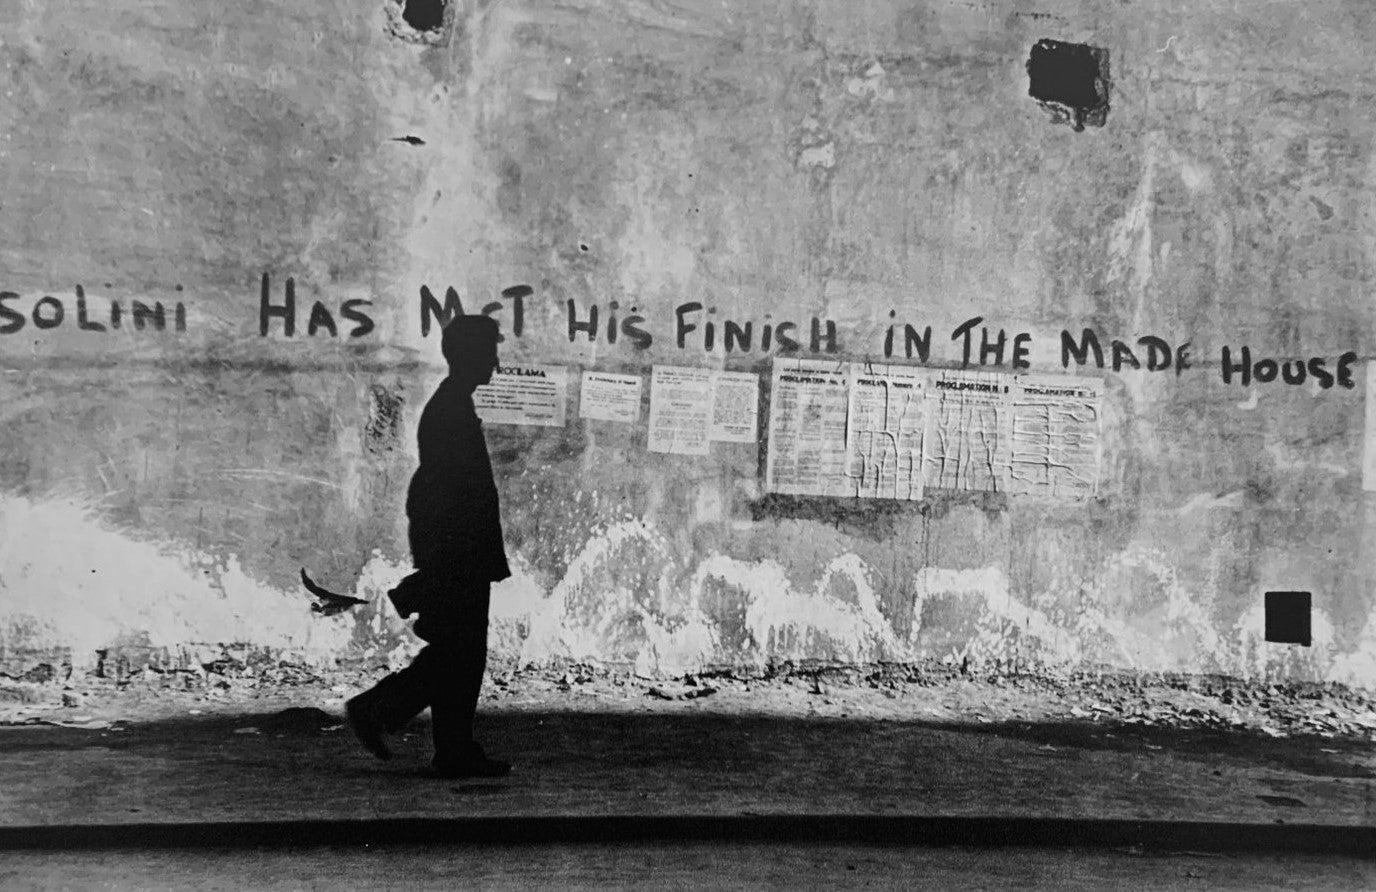 - Robert Capa - Italy, Napoli, 1944. Anti - Fascist slogans painted on Walls.